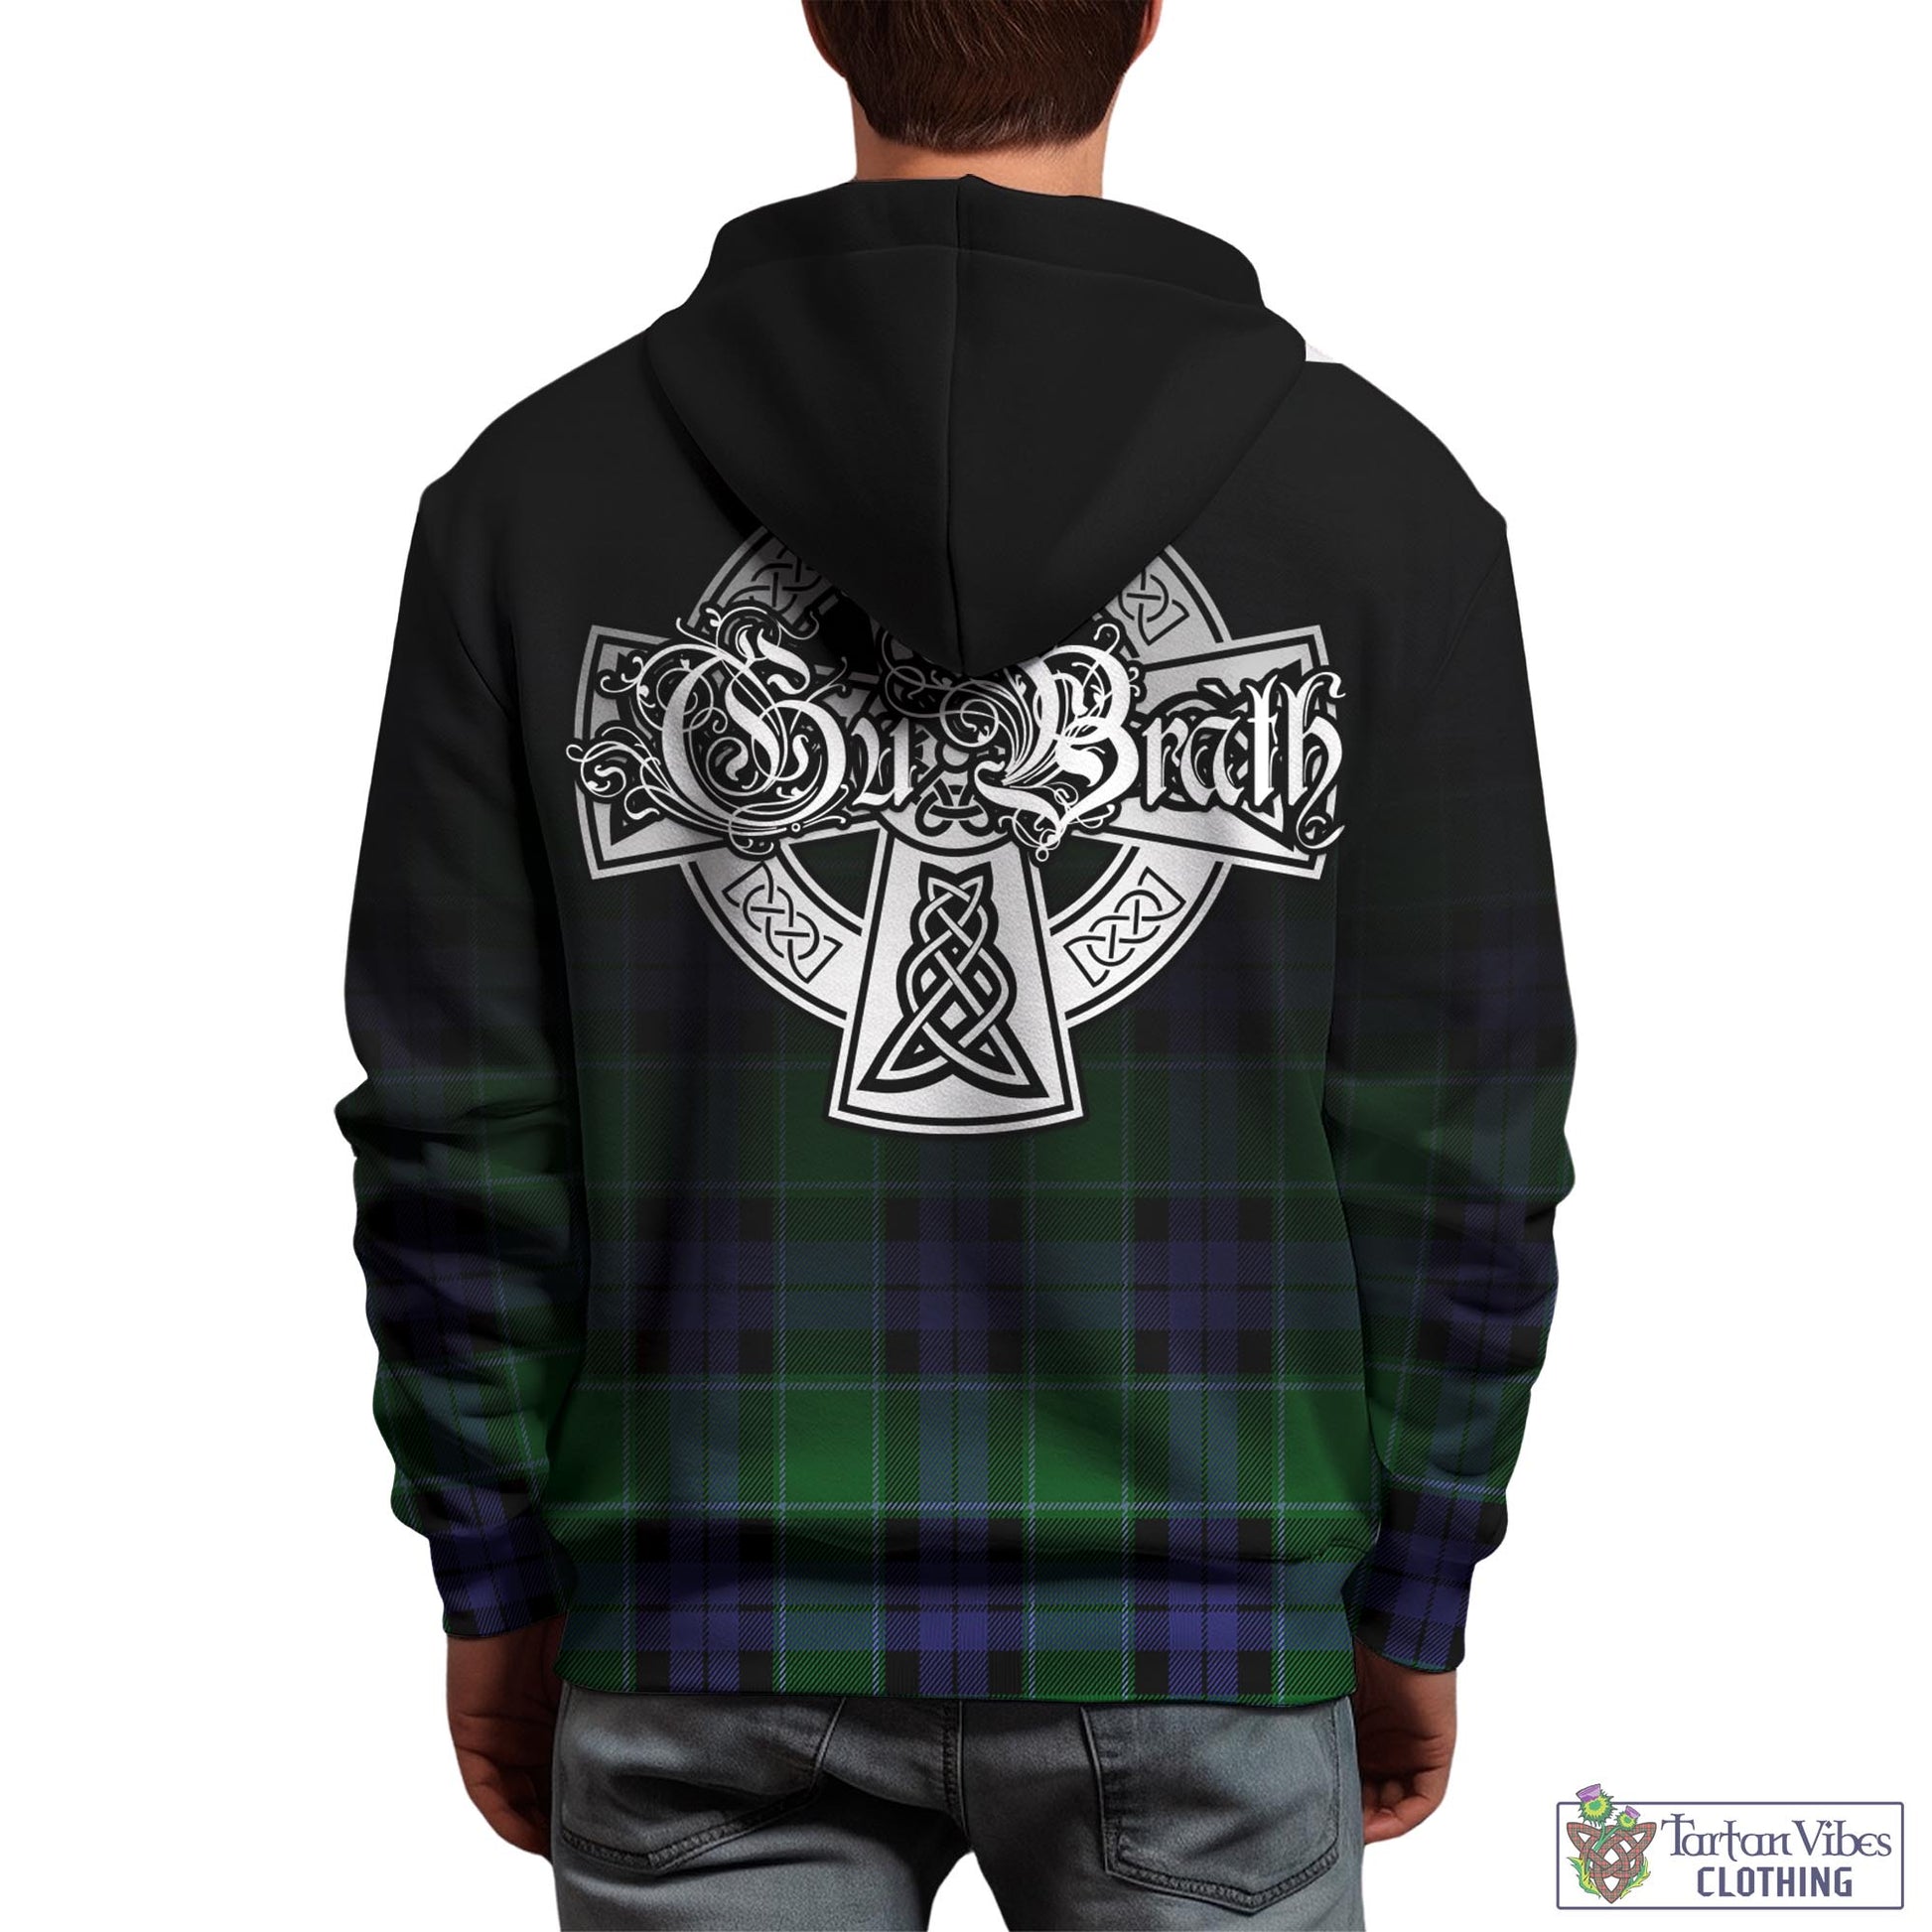 Tartan Vibes Clothing Haldane Tartan Hoodie Featuring Alba Gu Brath Family Crest Celtic Inspired